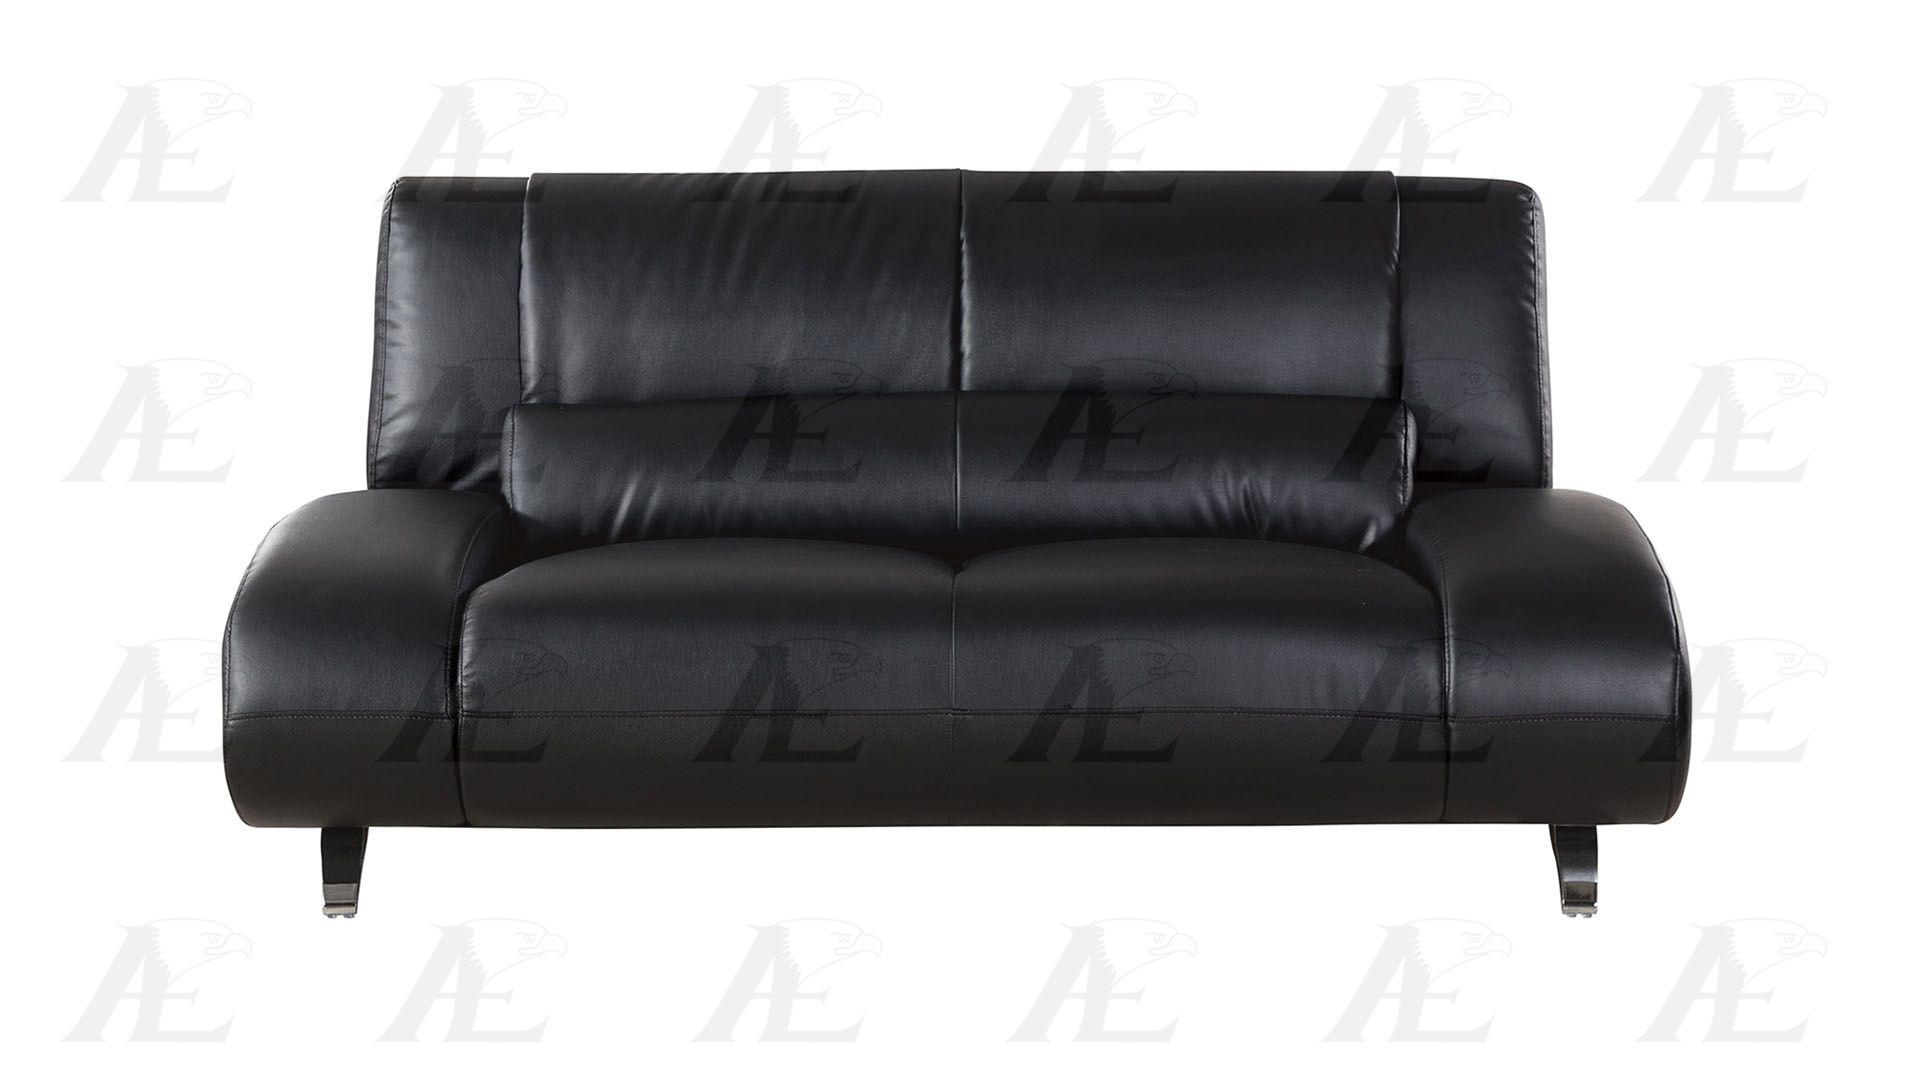 

                    
American Eagle Furniture AE728-BK Sofa and Loveseat Set Black Bonded Leather Purchase 
